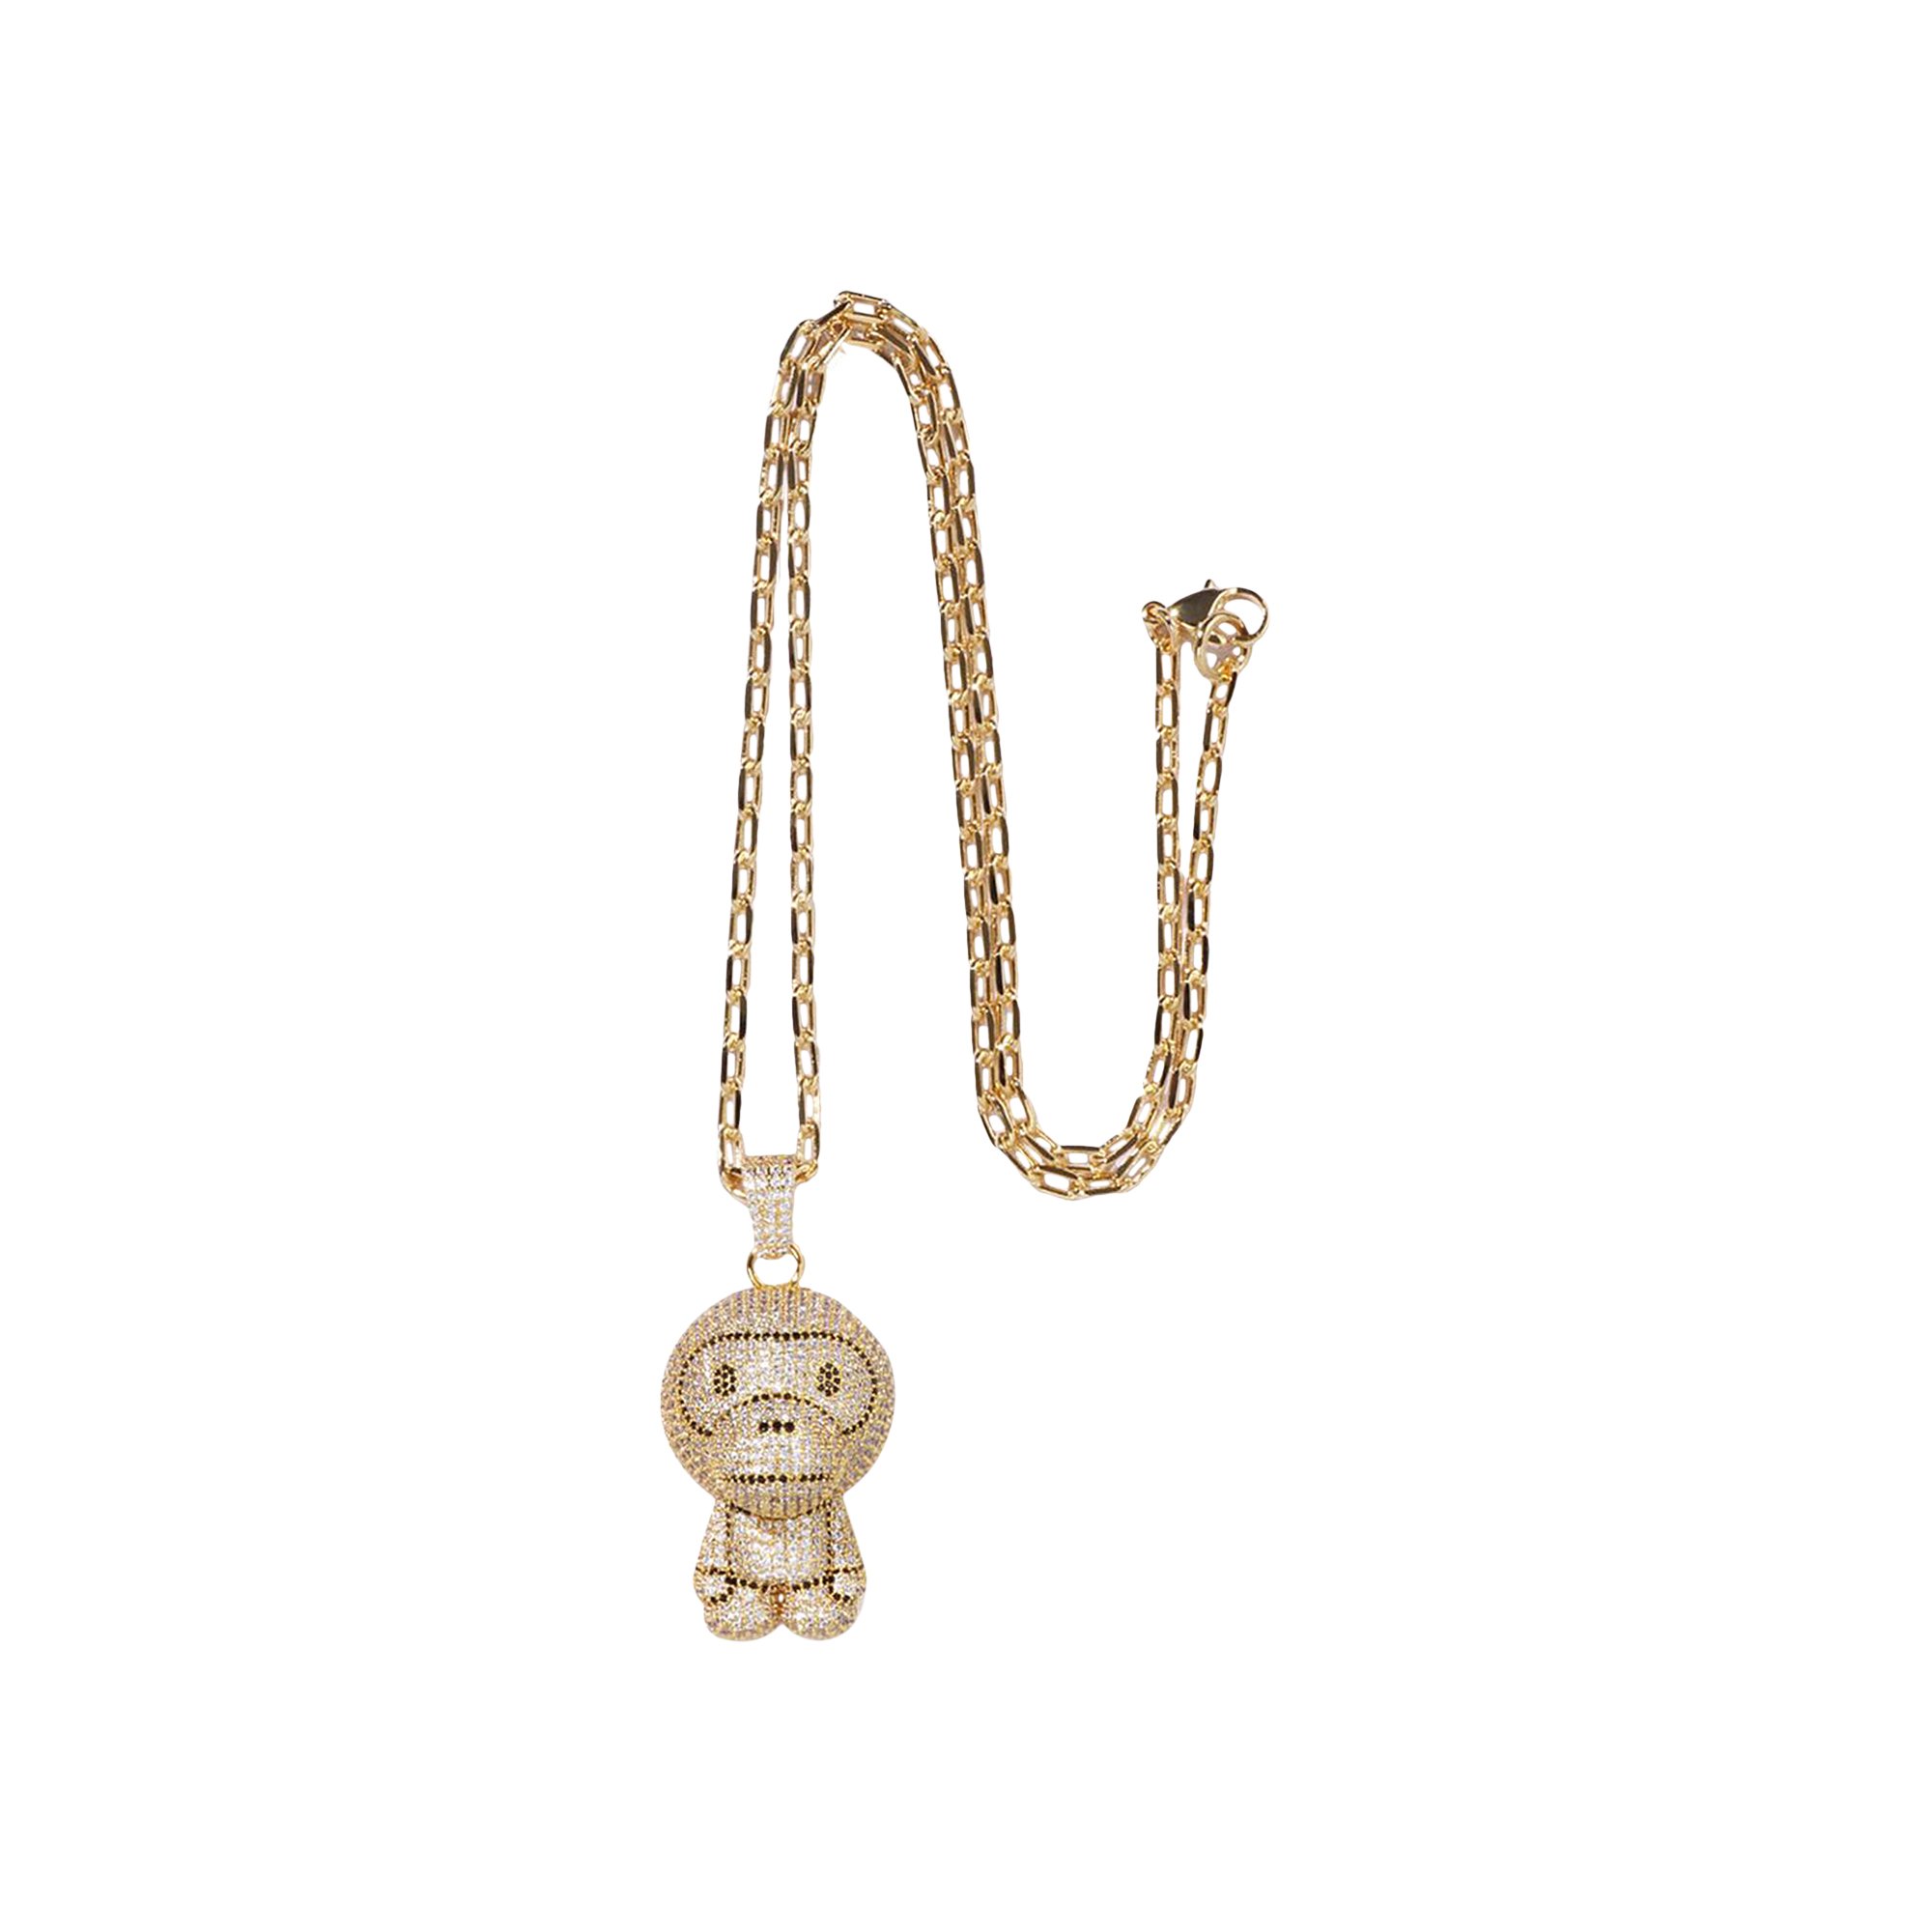 Buy BAPE Milo Crystal Stone Necklace 'Gold' - 2I80 182 002 GOLD | GOAT